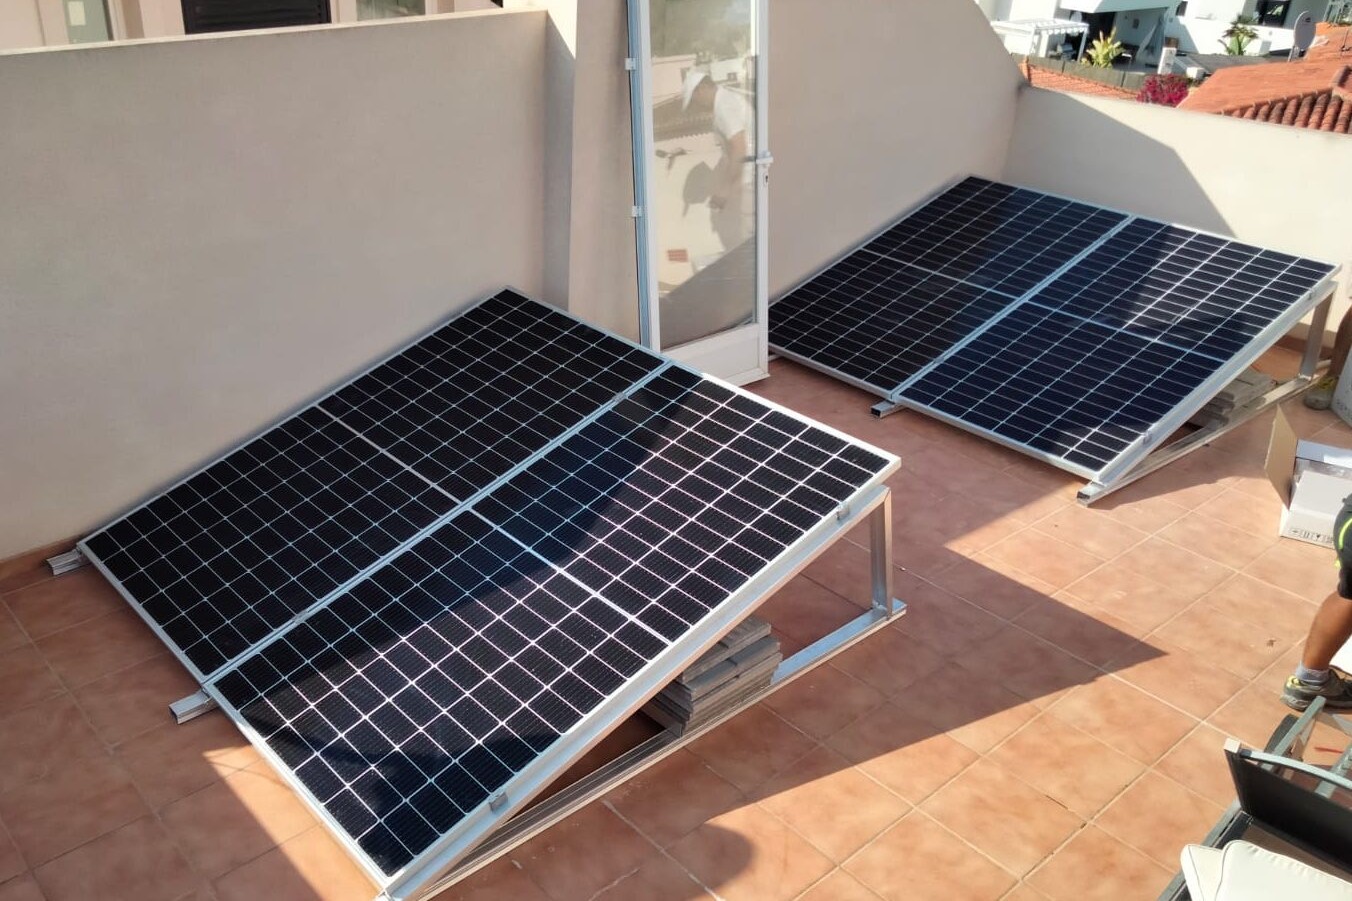 8X 460 wp Solar Panels, Alfaz del Pi, Alicante (Hybrid system)